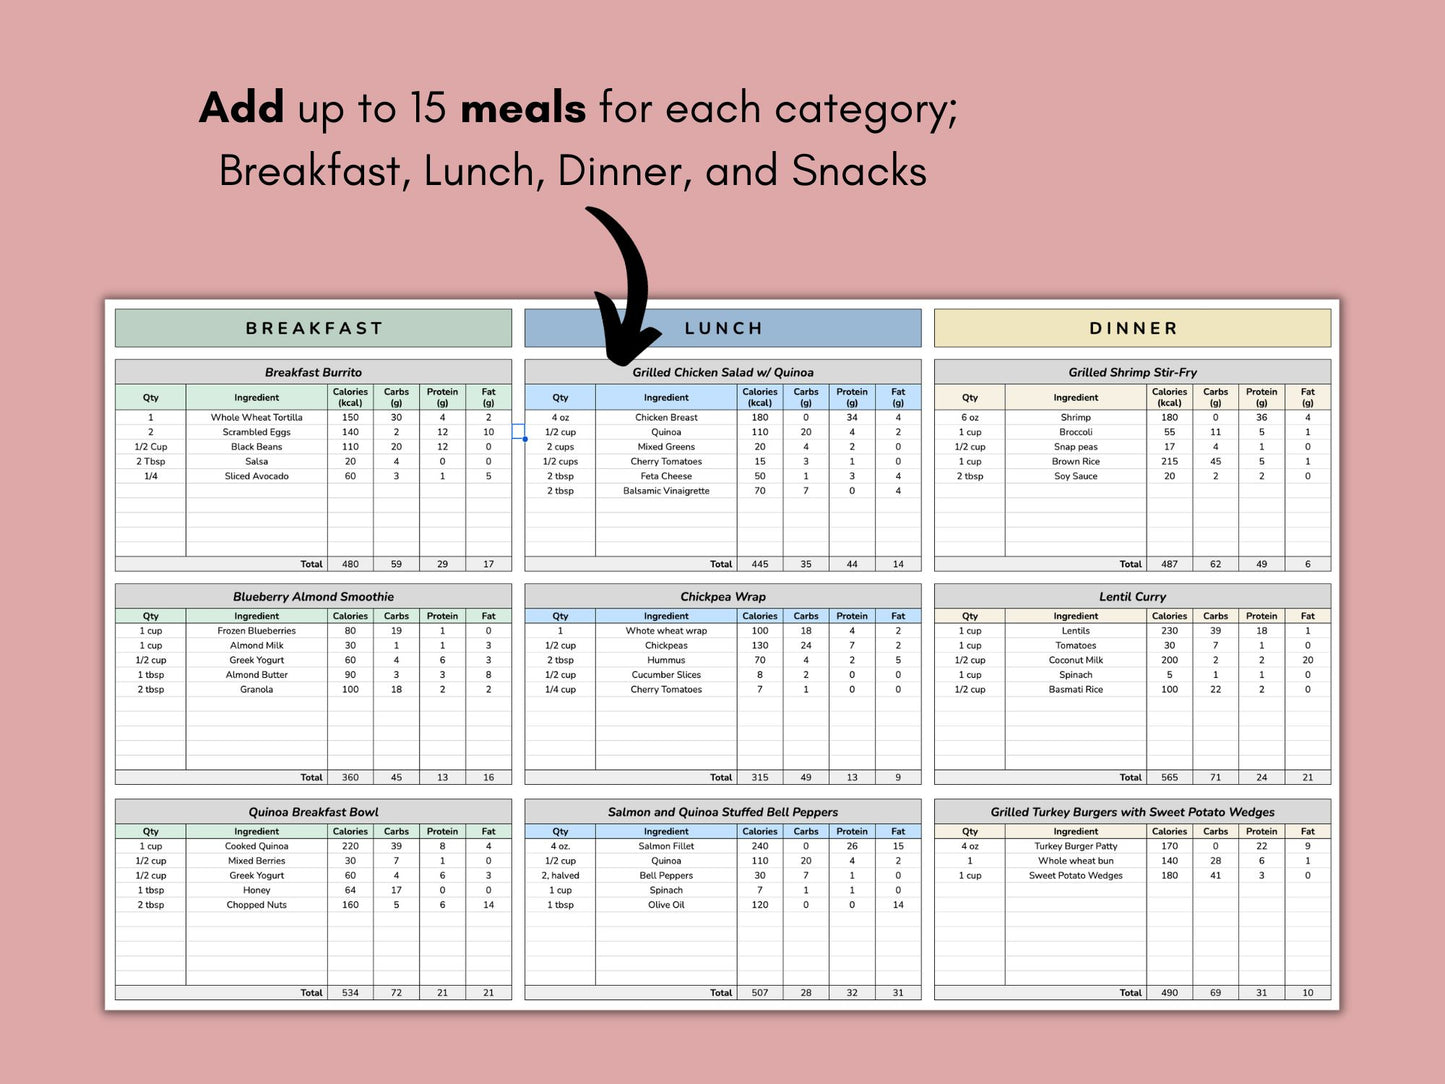 Weekly Macro Meal Planner | Google Sheets Template